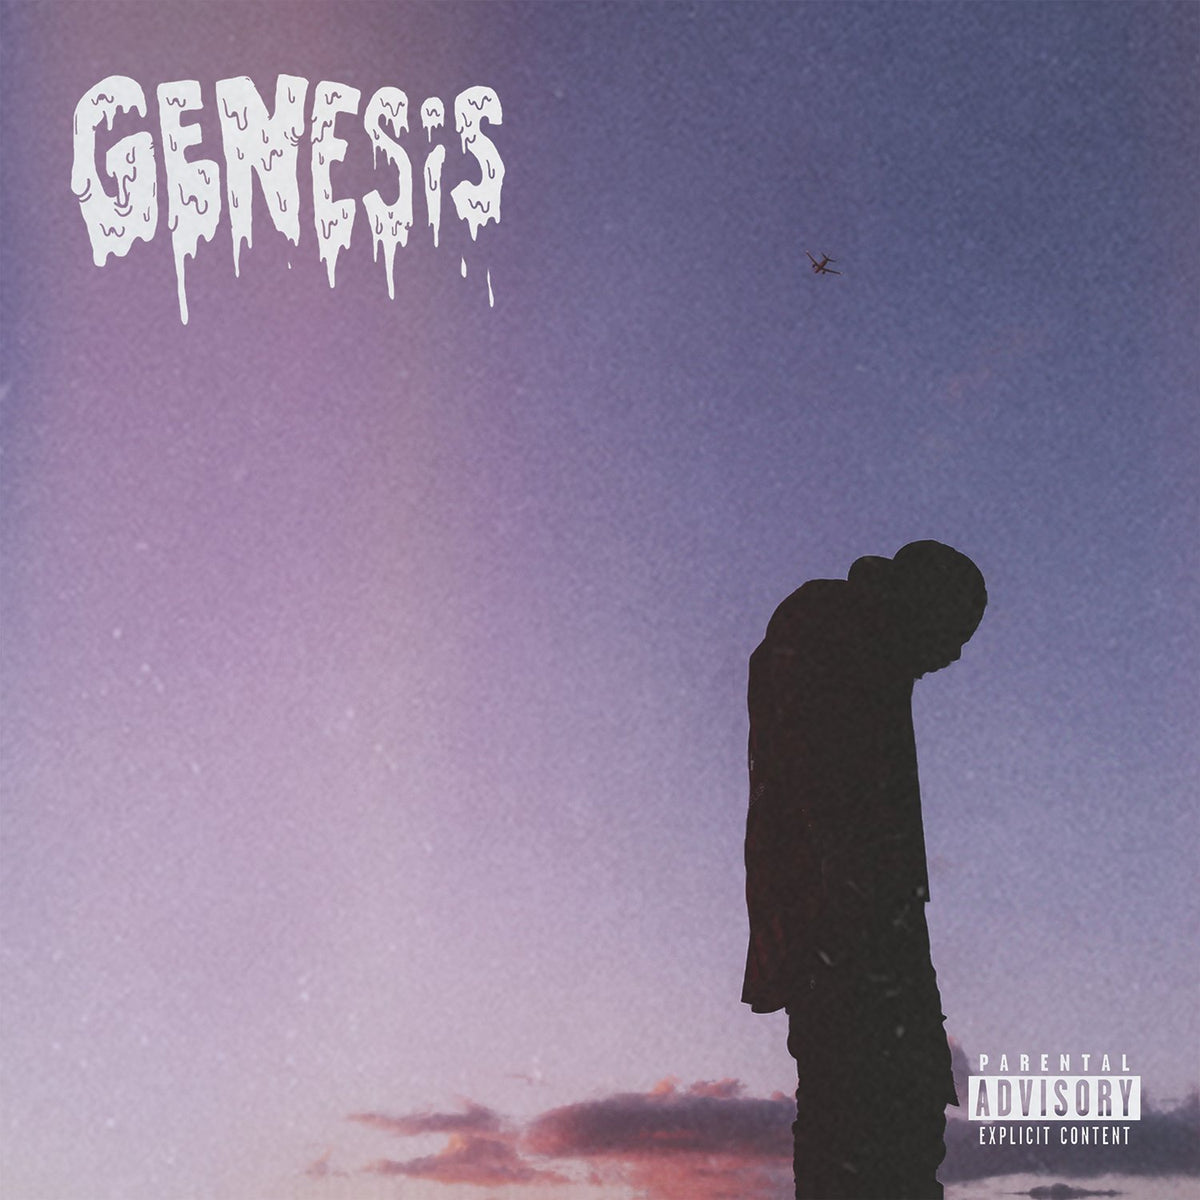 Domo Genesis Picks Albums Everyone Needs to Own